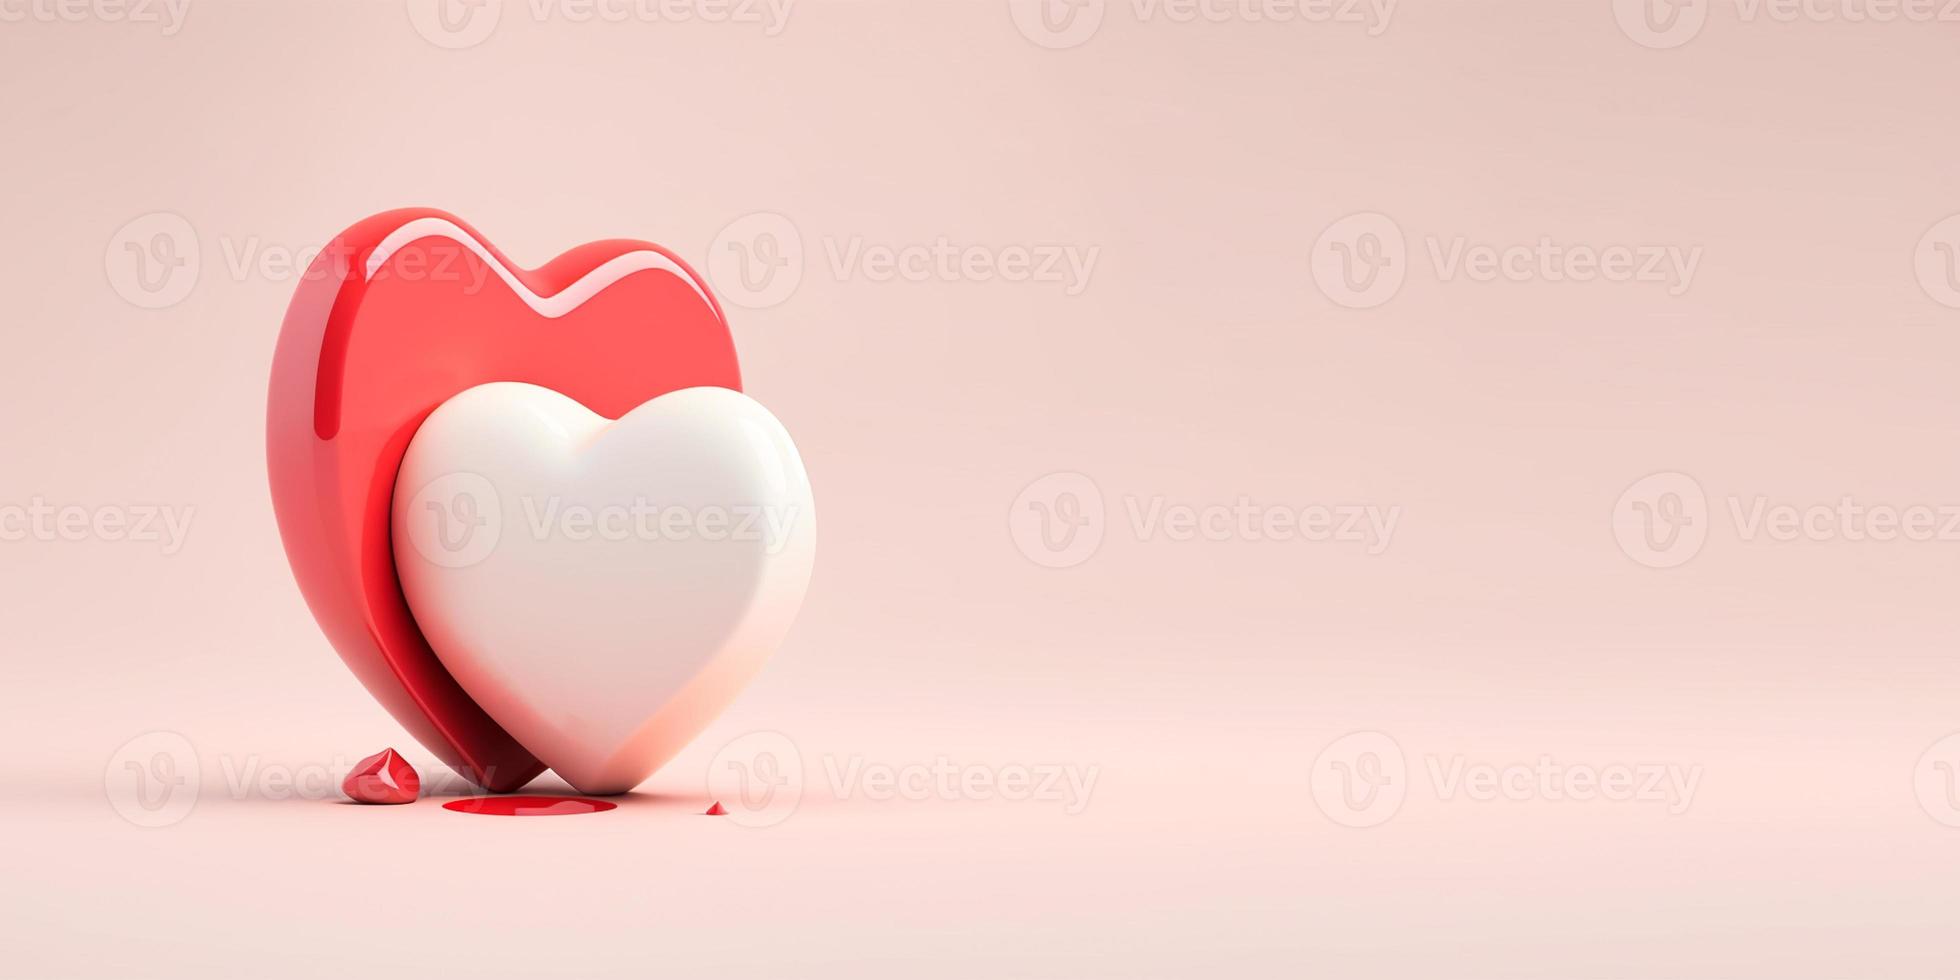 contento san valentin día podio decoración con corazón forma globo, regalo caja, papel picado, 3d representación ilustración con rosado antecedentes. foto